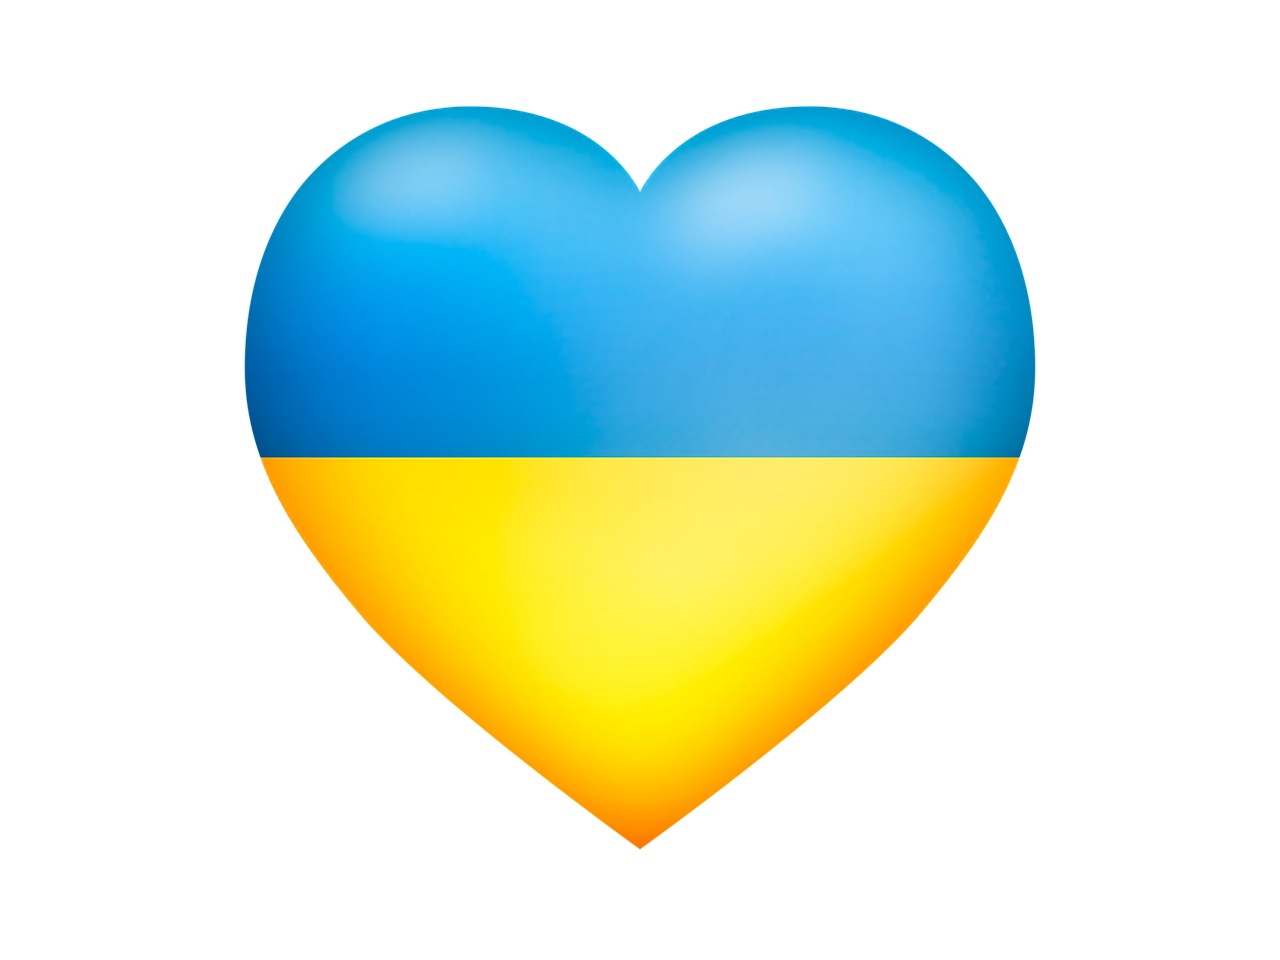 Flaga Ukrainy w kształcie serca